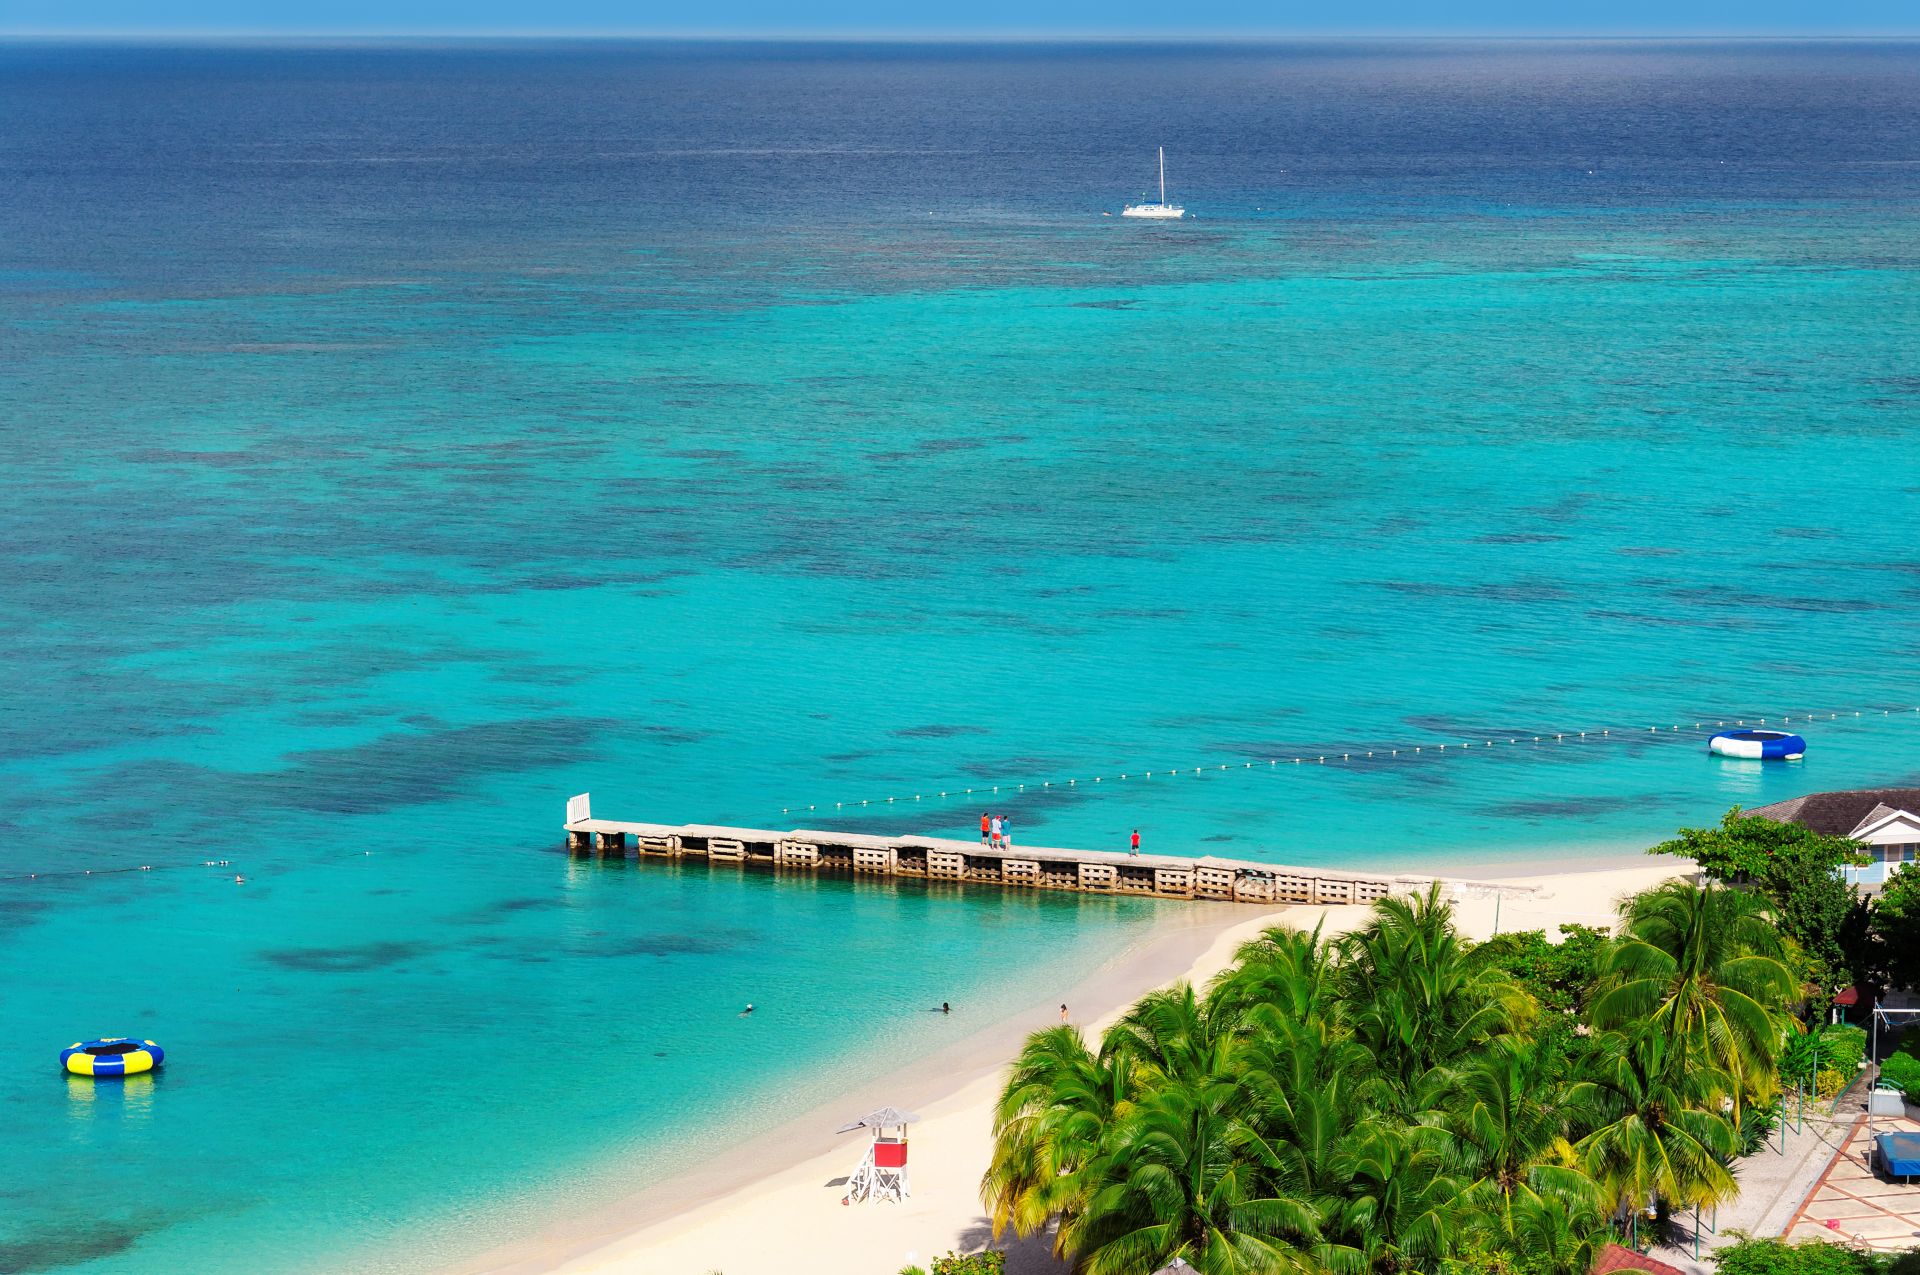 Вид с воздуха на красивый карибский пляж и пирс